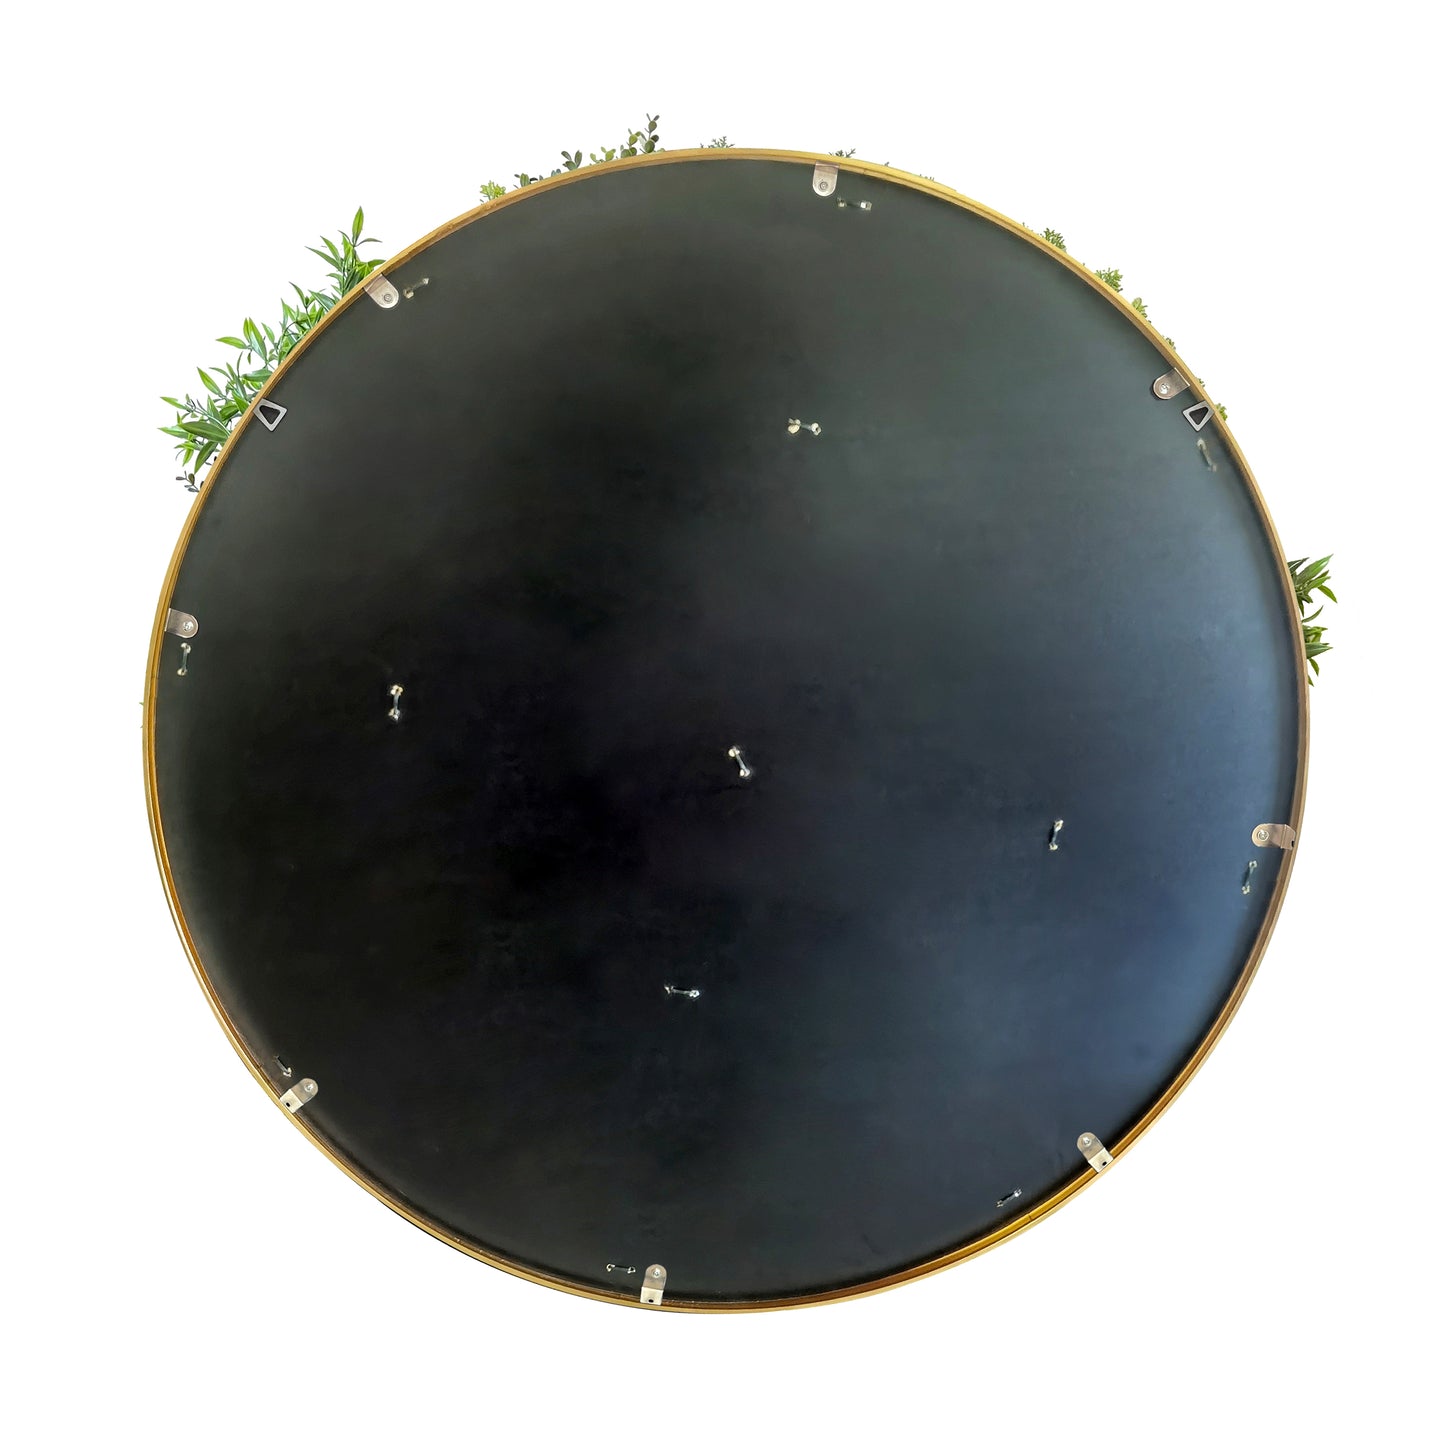 Oasis artificial green disc 1m diameter